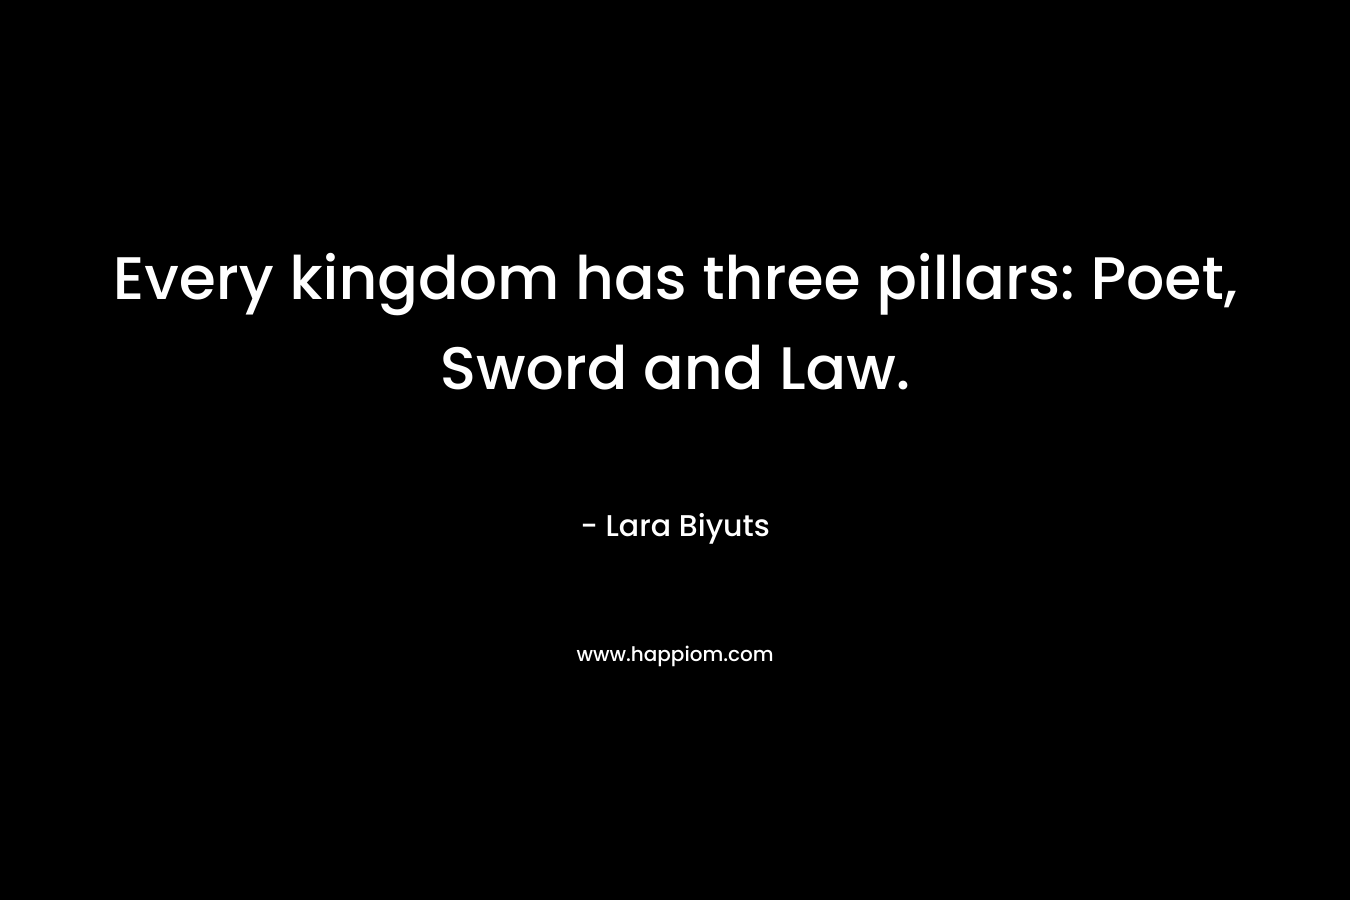 Every kingdom has three pillars: Poet, Sword and Law.